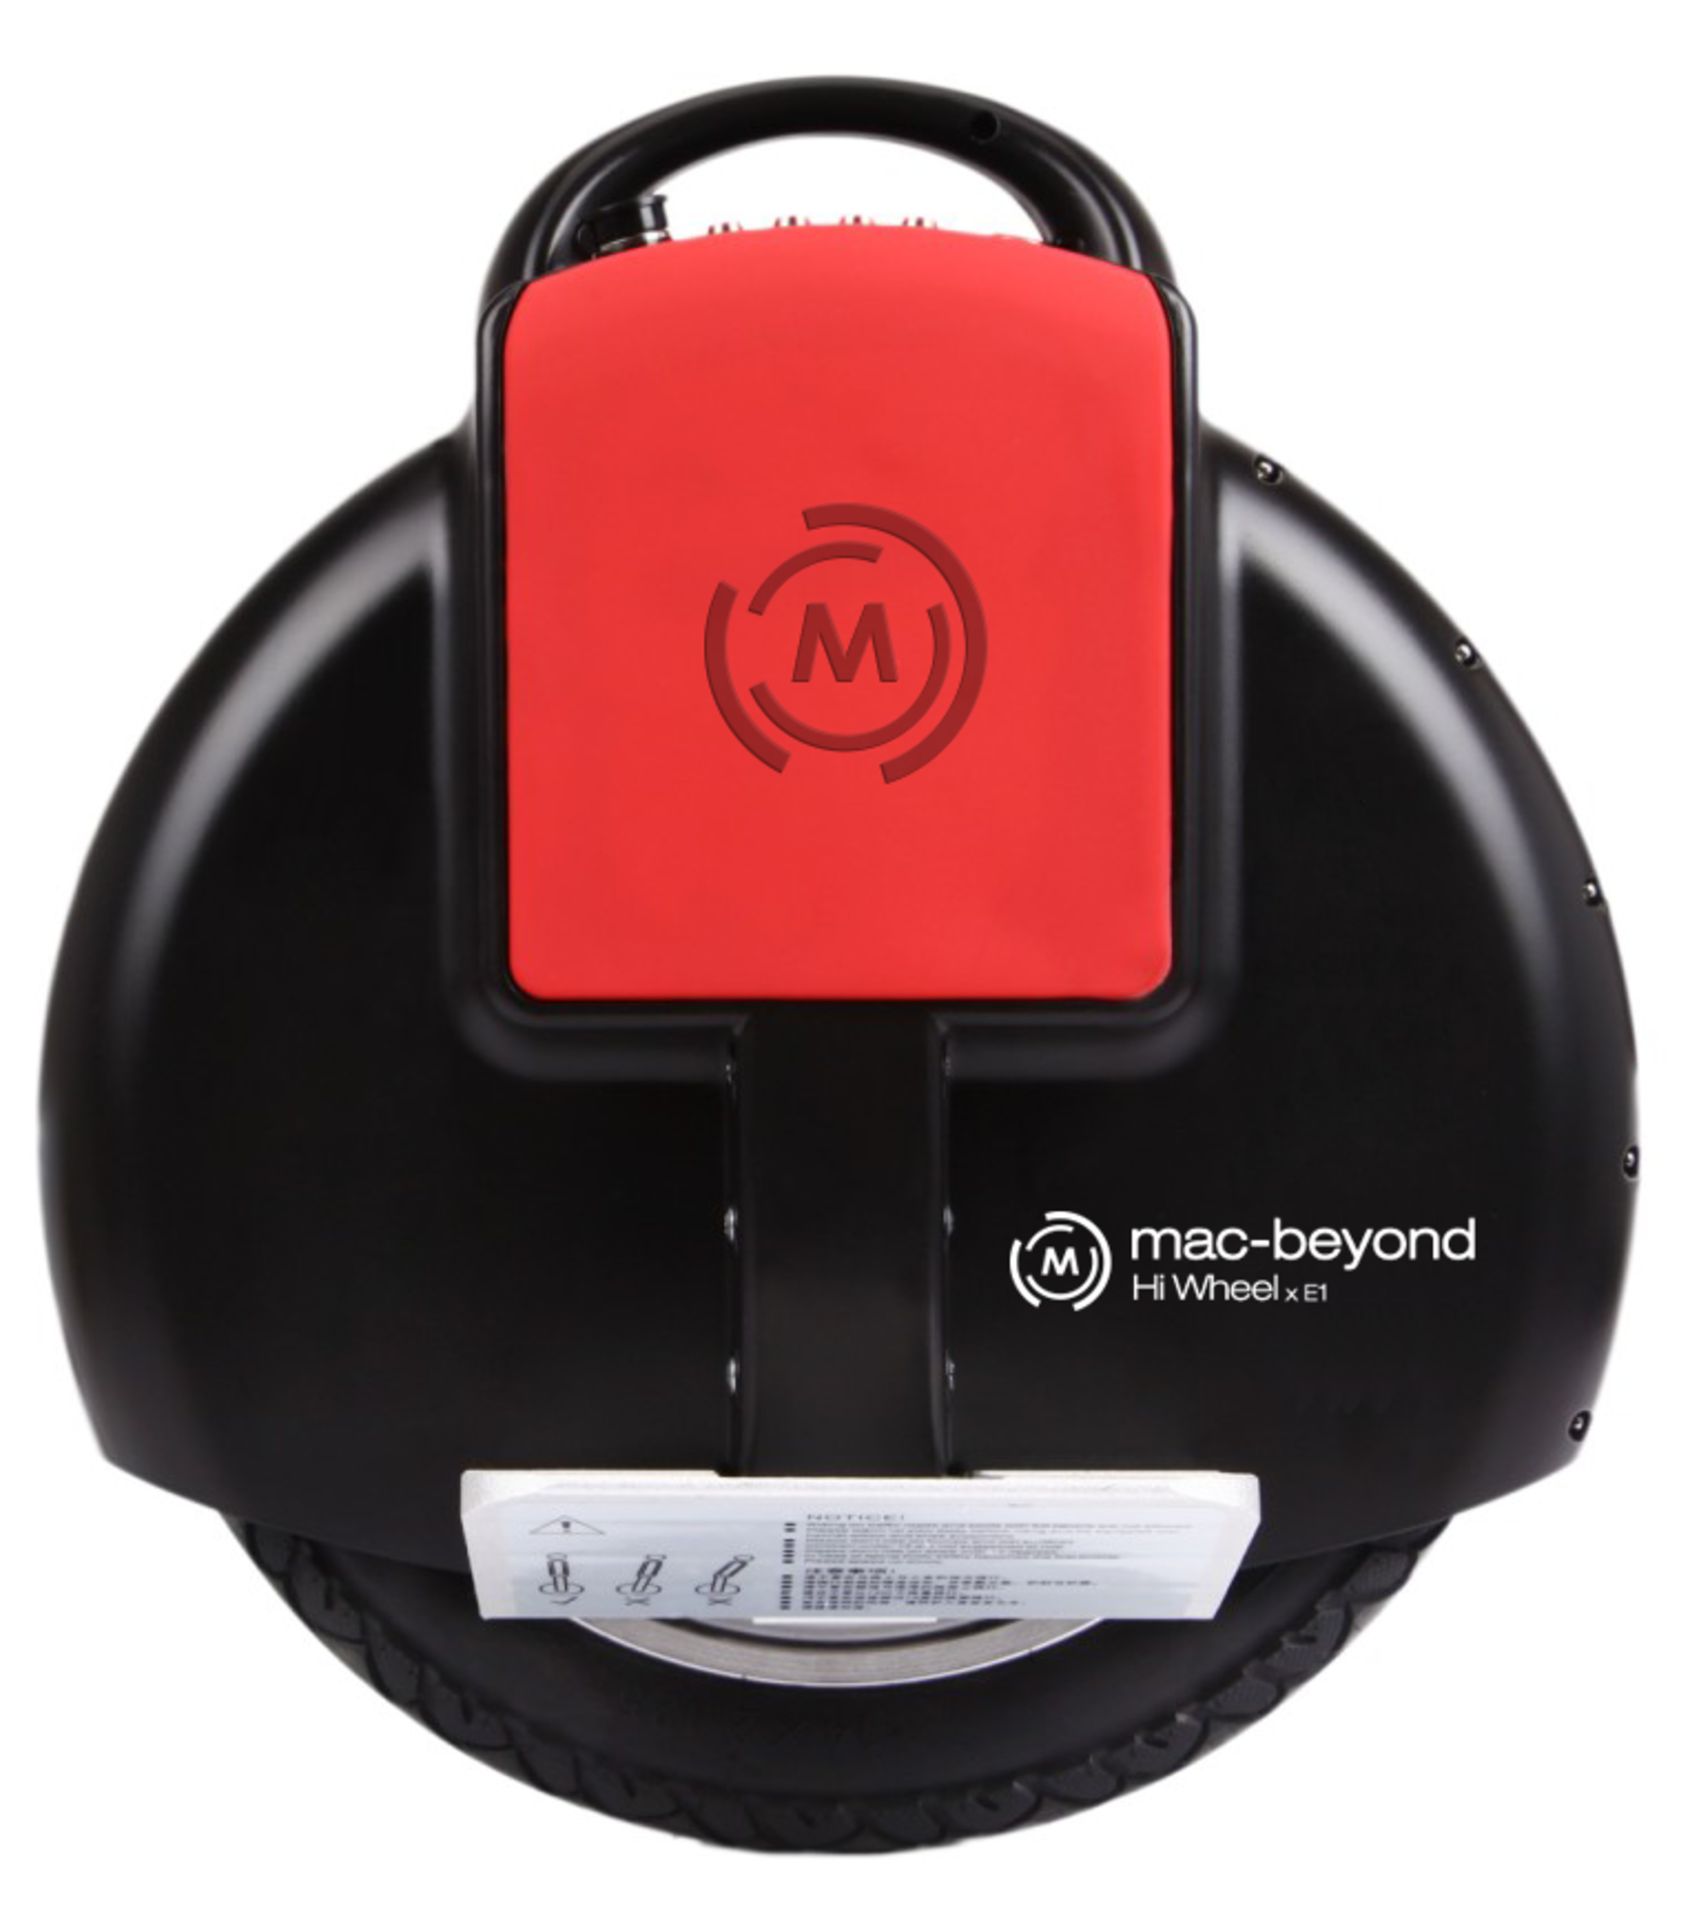 macbeyond x Hi wheel Series, - Black Model Name: E1 (Best Choice for One Wheel User) Smart